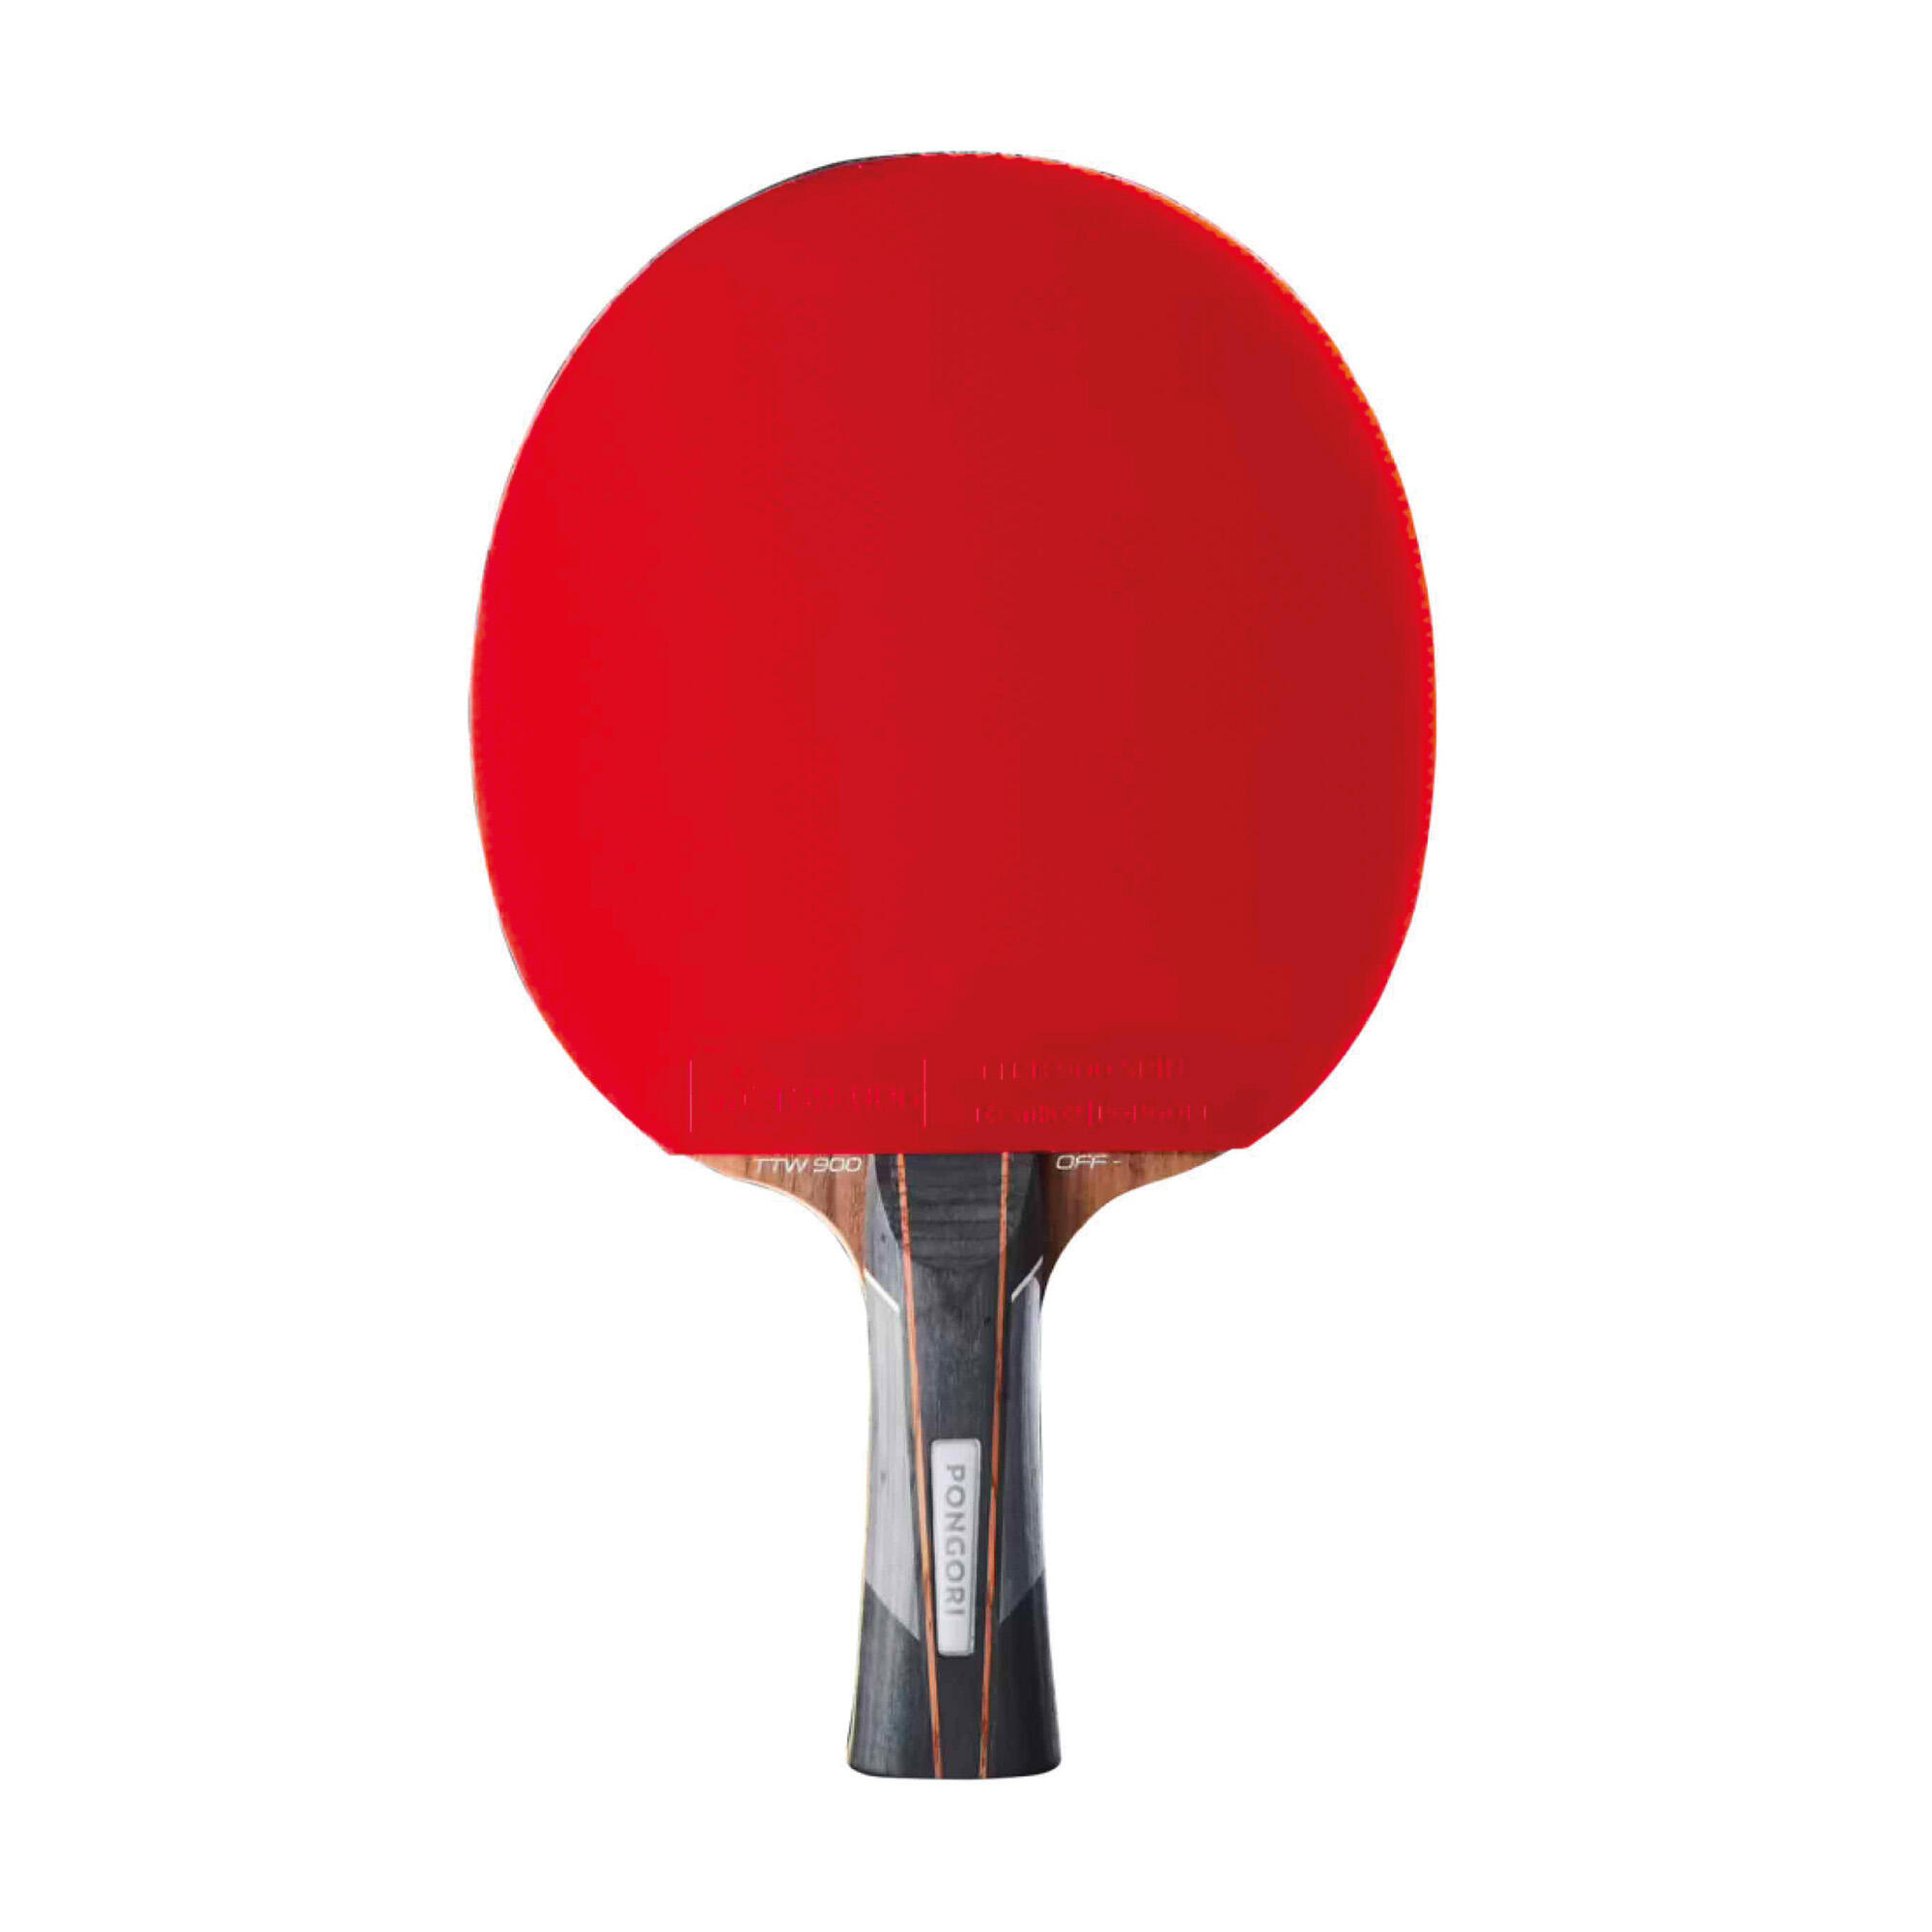 Raquette de tennis de table club - TTR 900 Spin - PONGORI